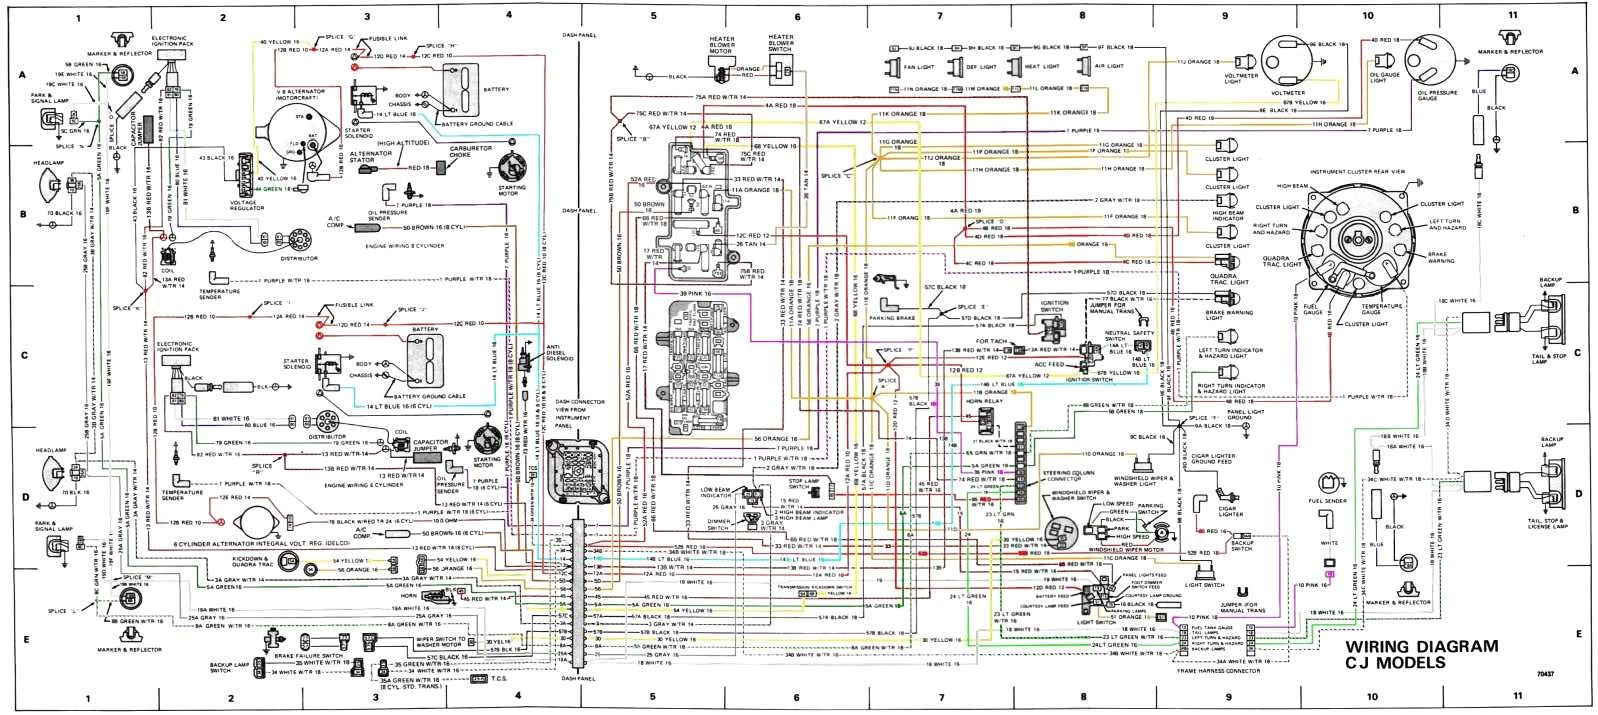 83 jeep cj 7 wiring diagram wiring diagram name jeep cj wiring diagram 83 jeep cj7